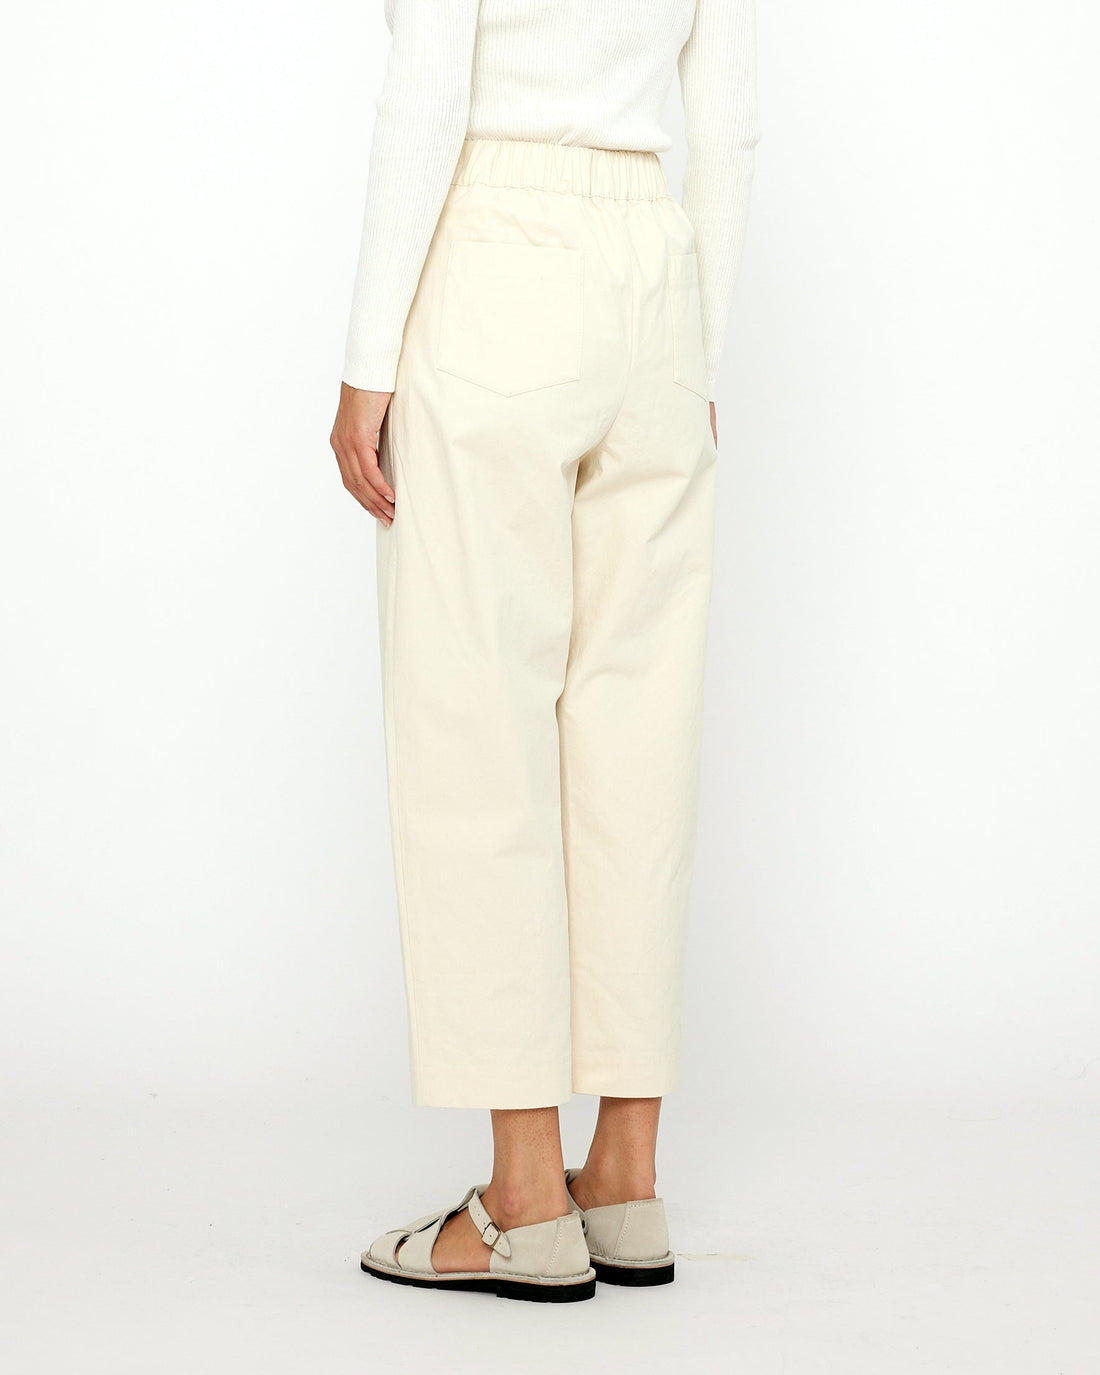 Signature Curve Legged Trouser - Cotton Edition - Off-White